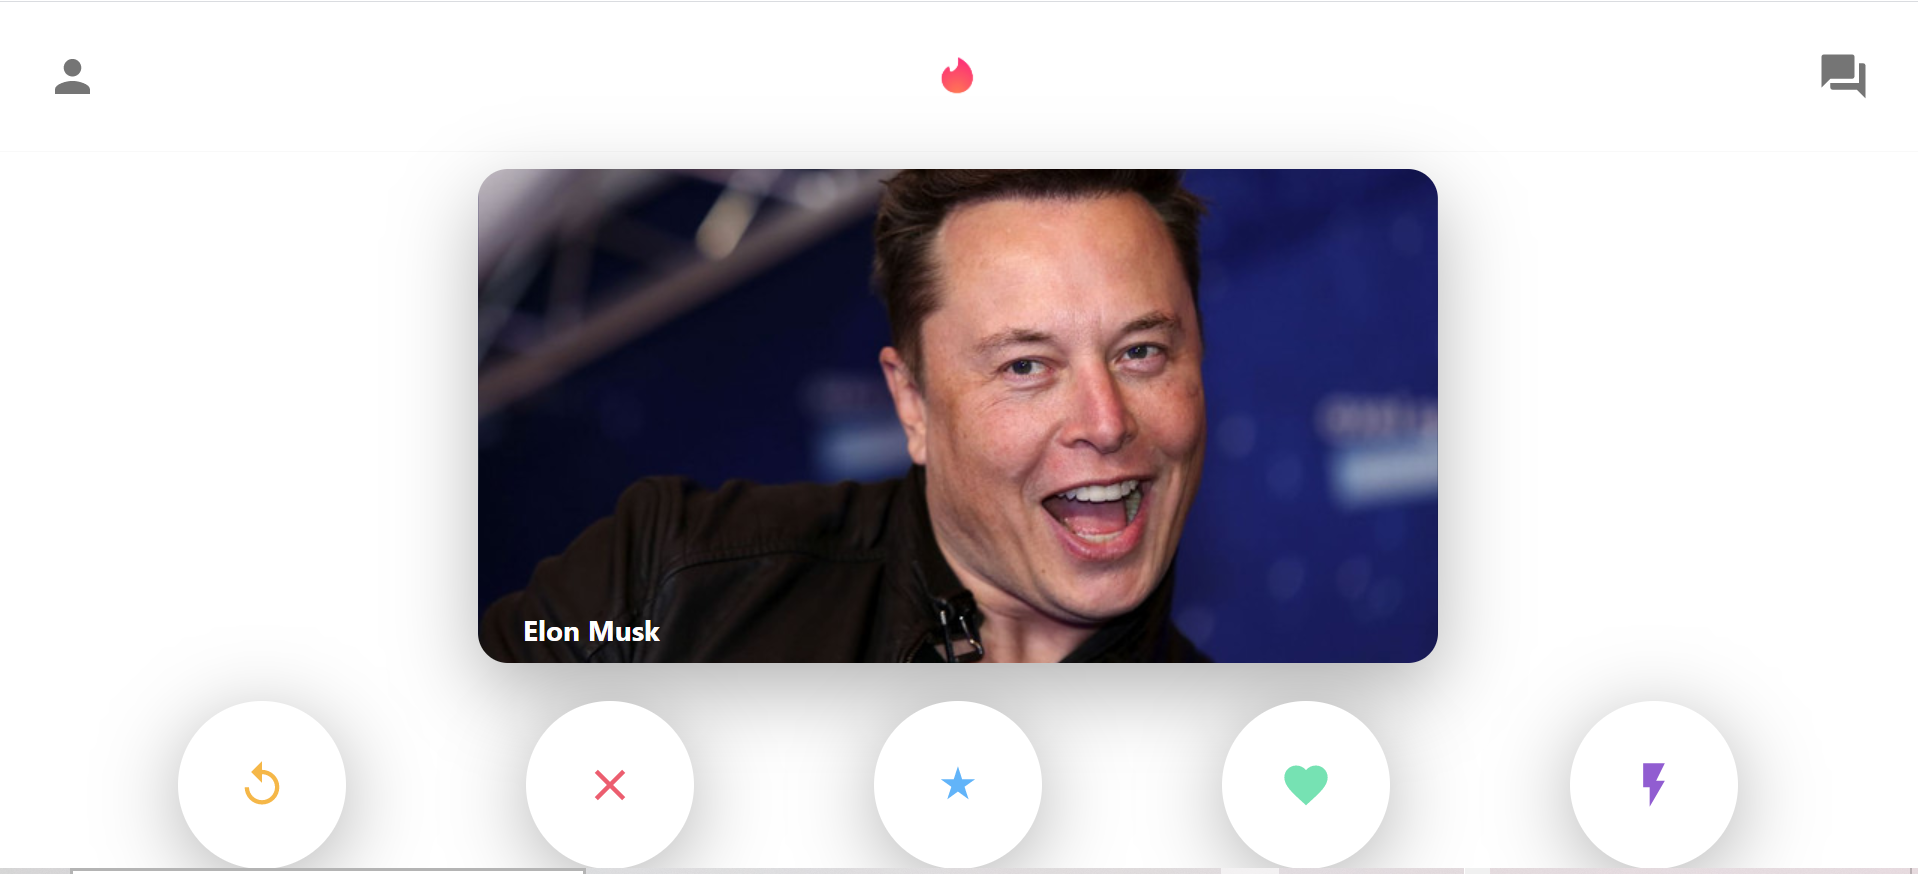 Elon musk in tinder